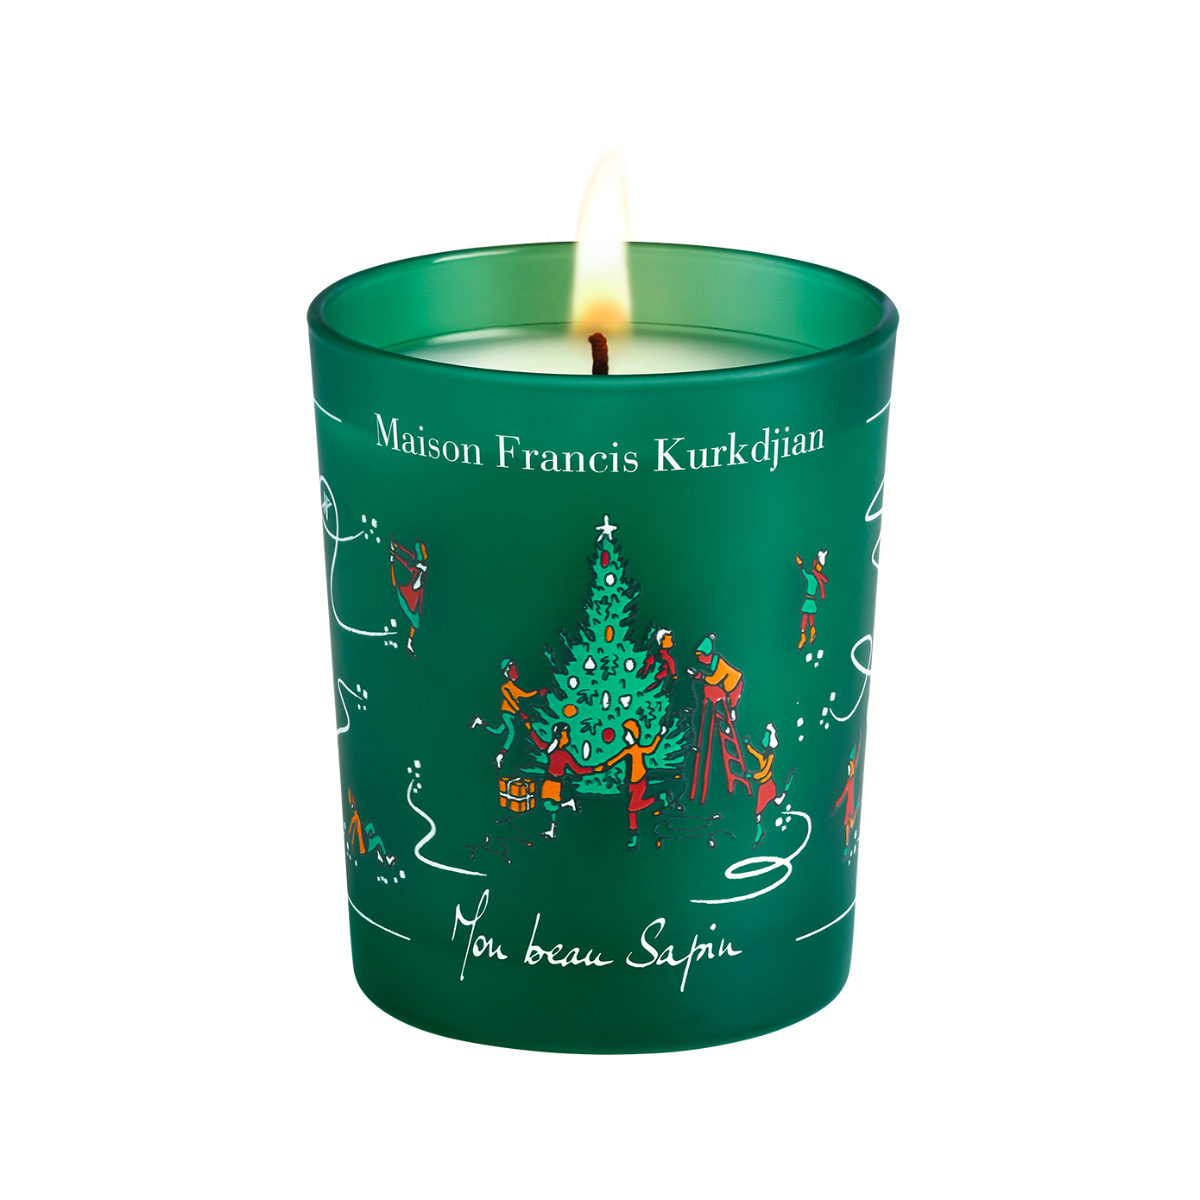 Maison Francis Kurkdjian: Paris As A Gift